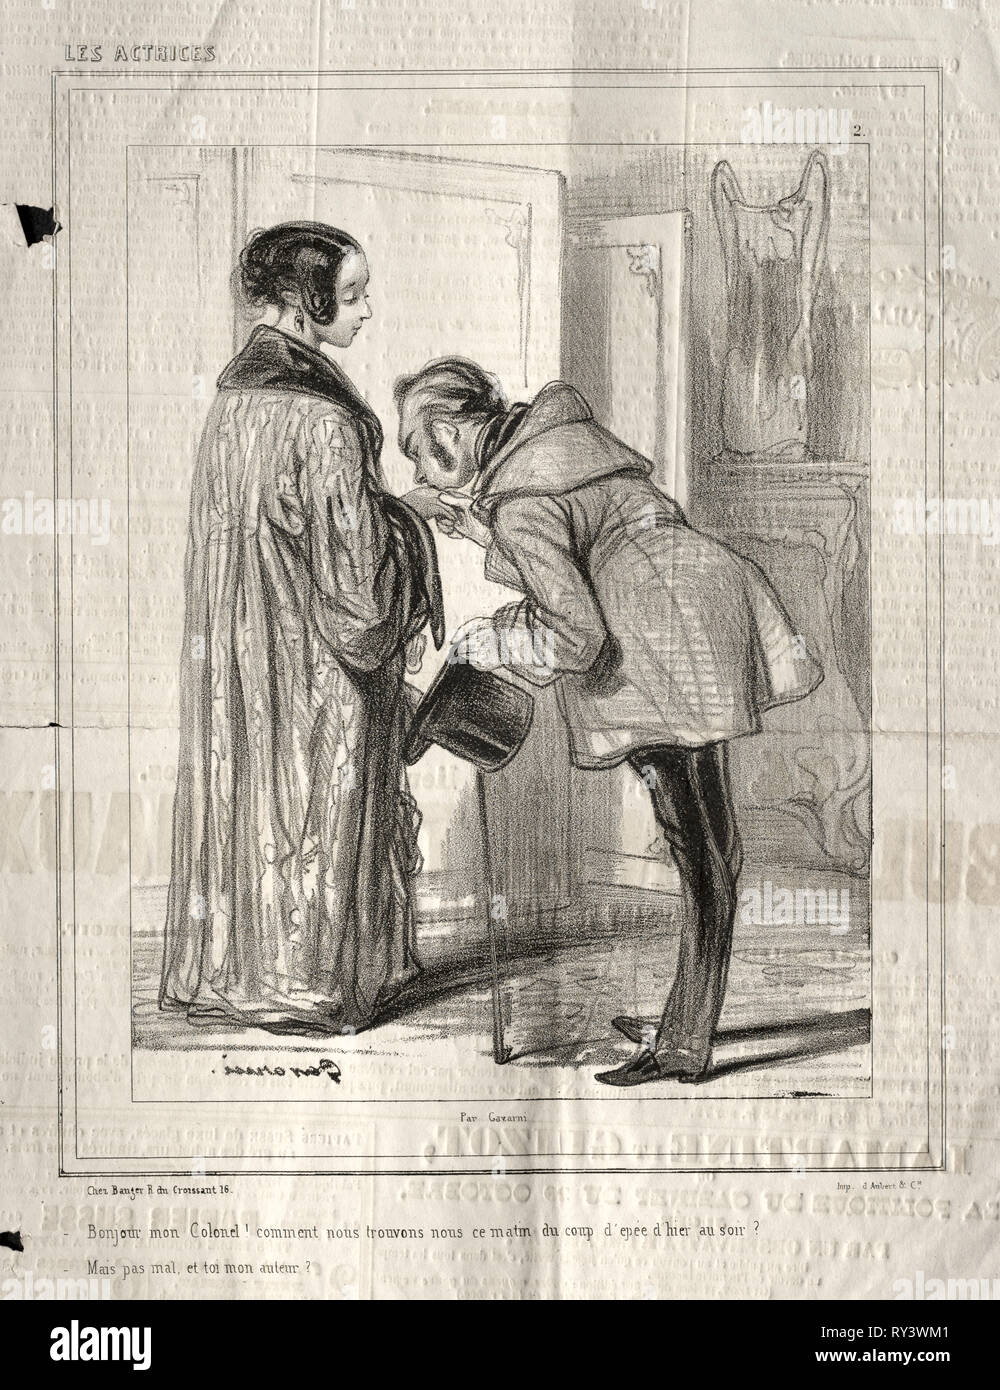 Les Actrices:  Bonjour mon Colonel!, 1843. Paul Gavarni (French, 1804-1866). Lithograph Stock Photo